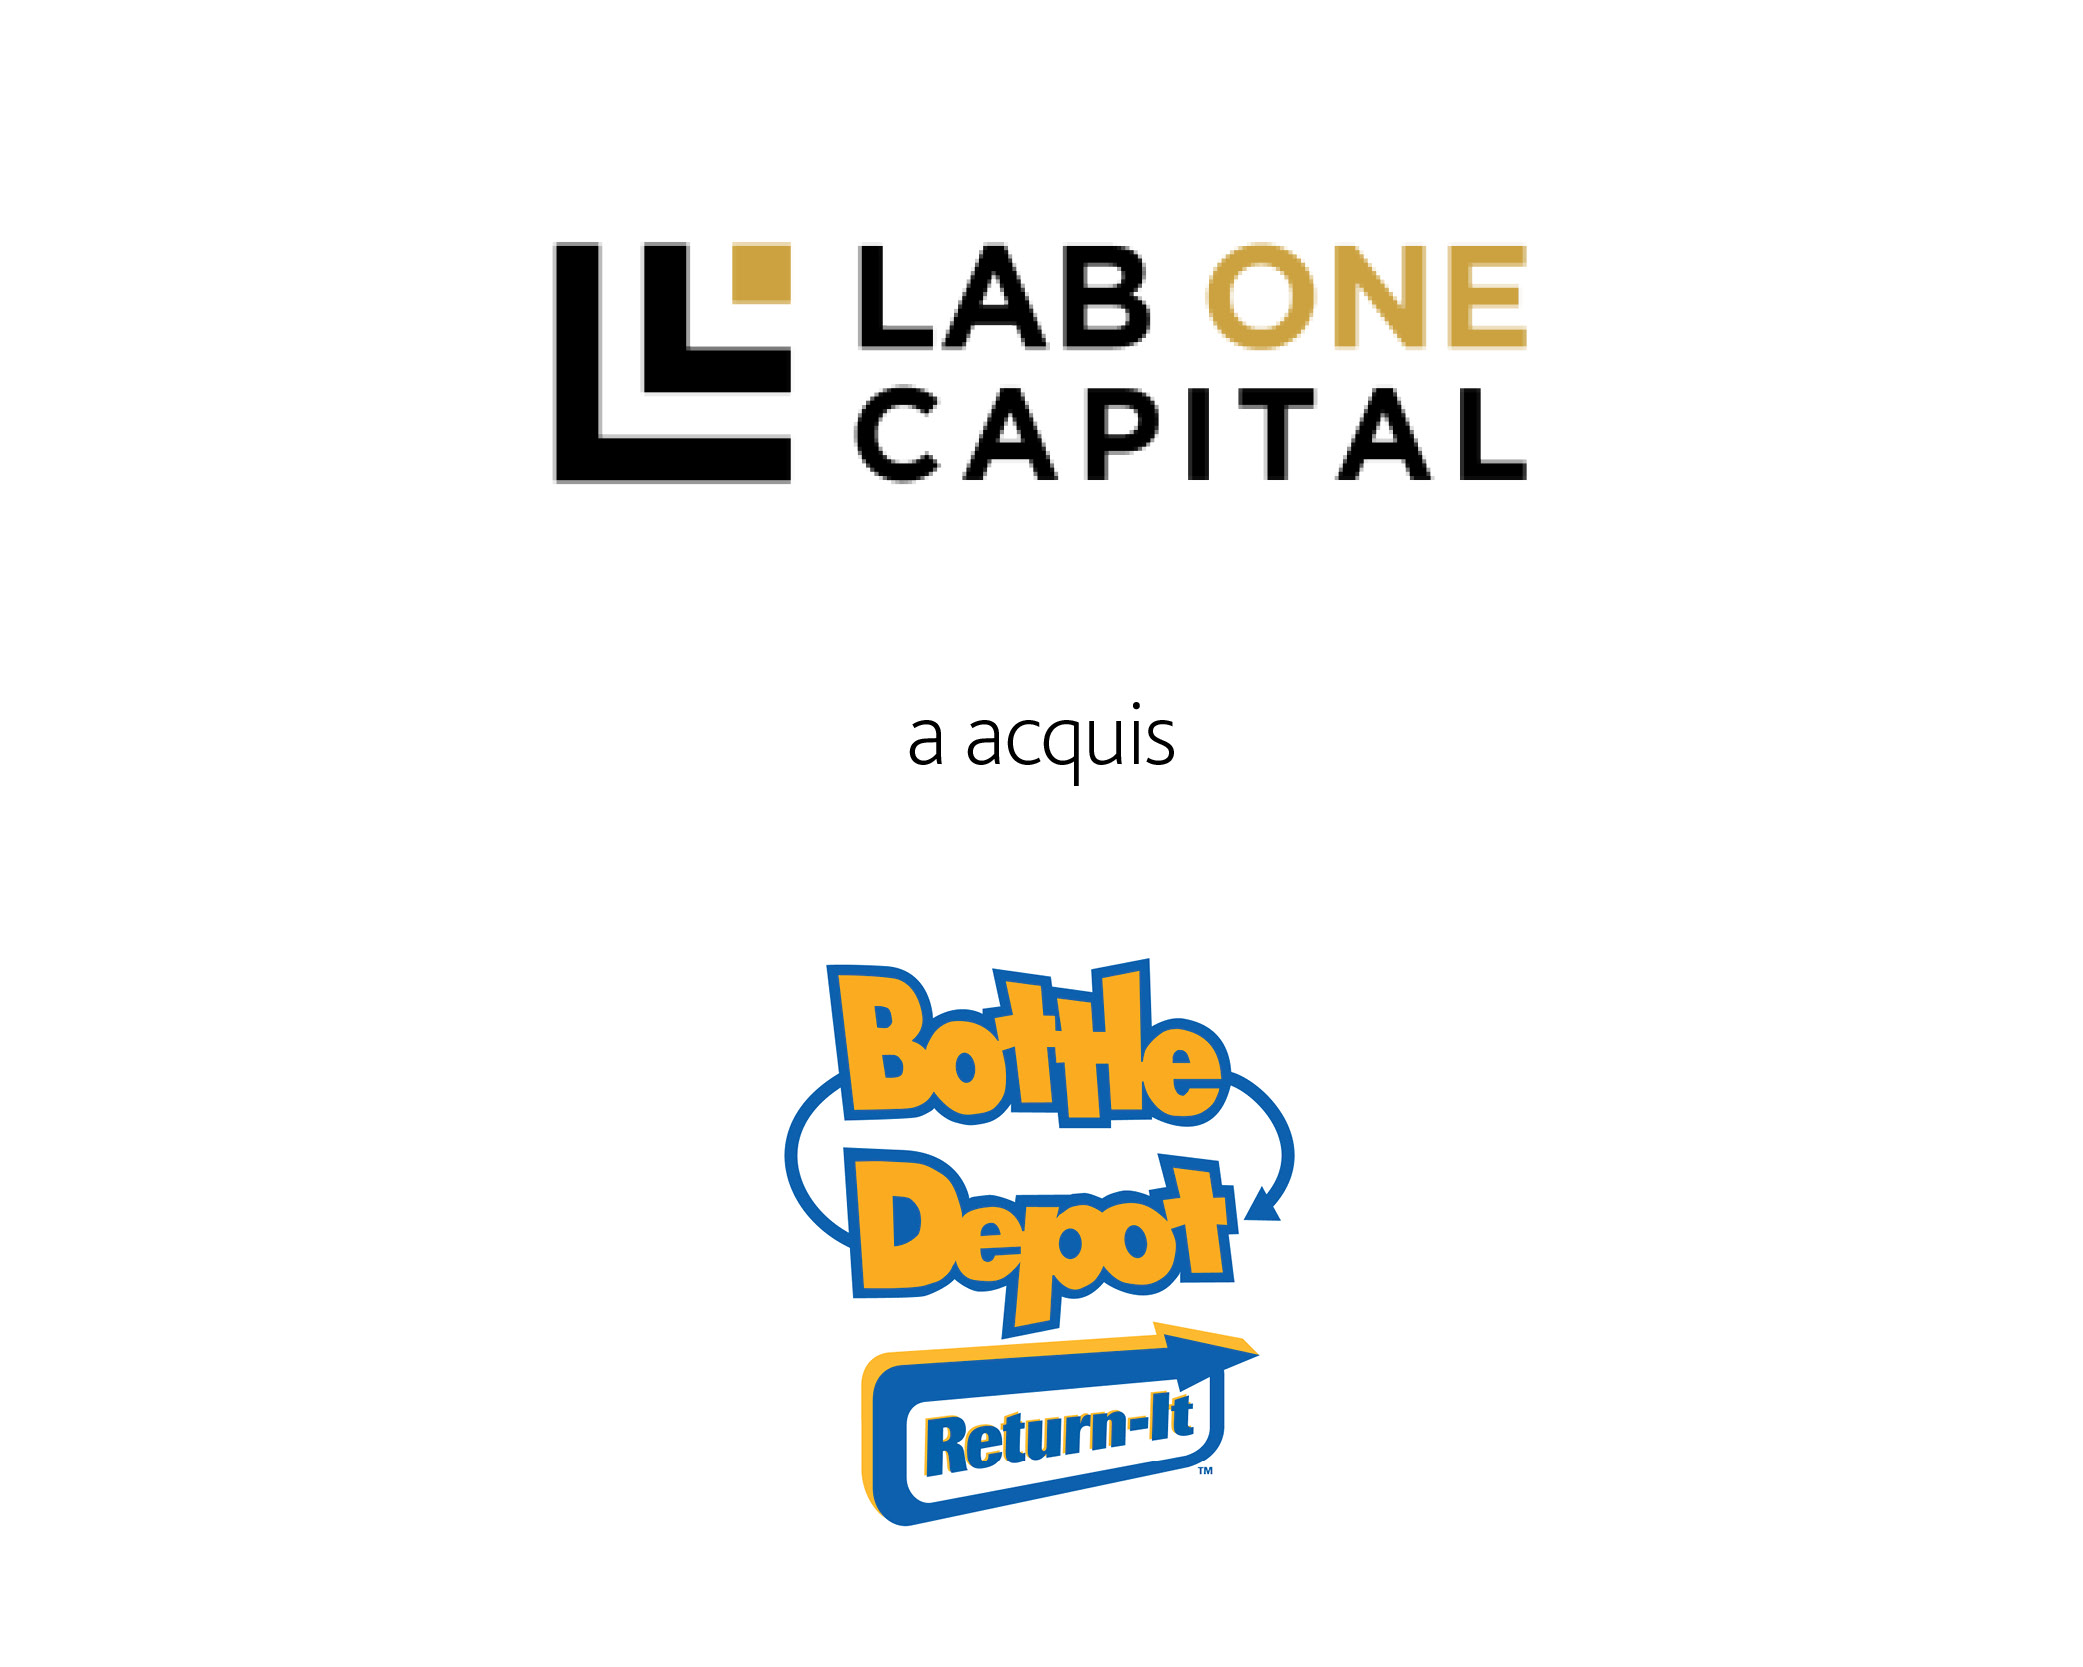 Lab One Capital a acquis Bottle Depot.